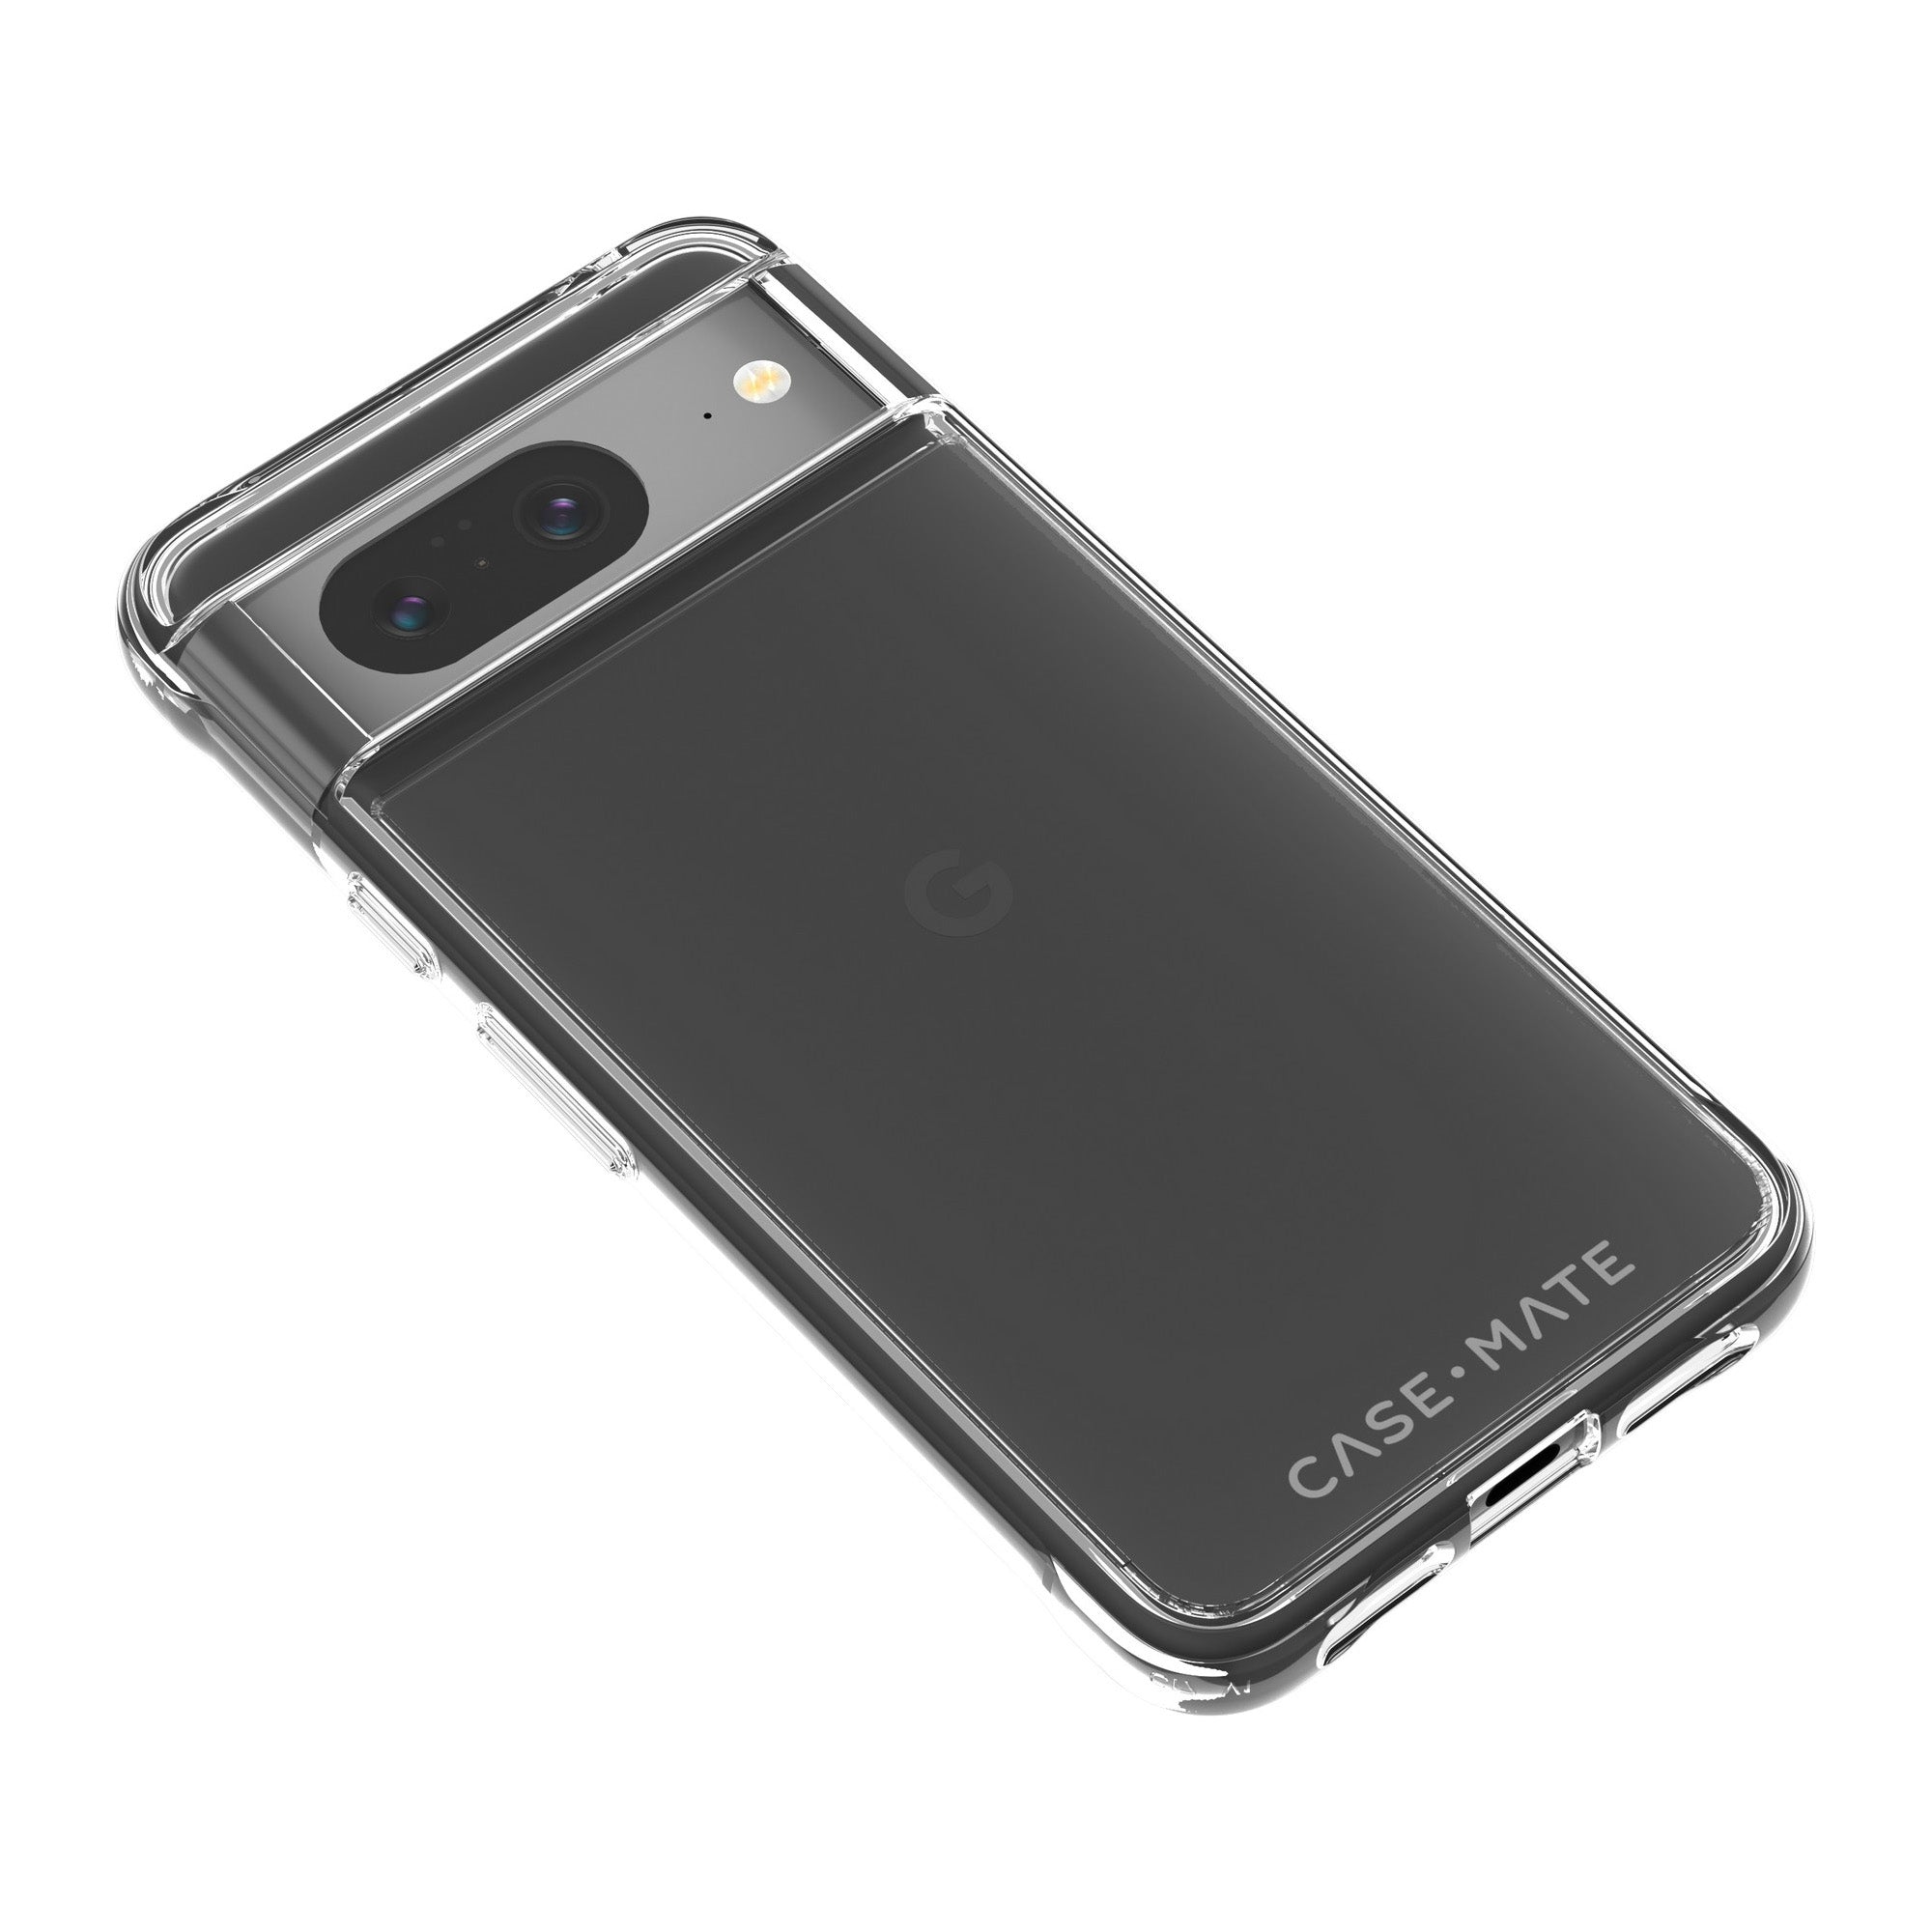 Google Pixel 8 Case-Mate Tough Case - Clear - 15-12084